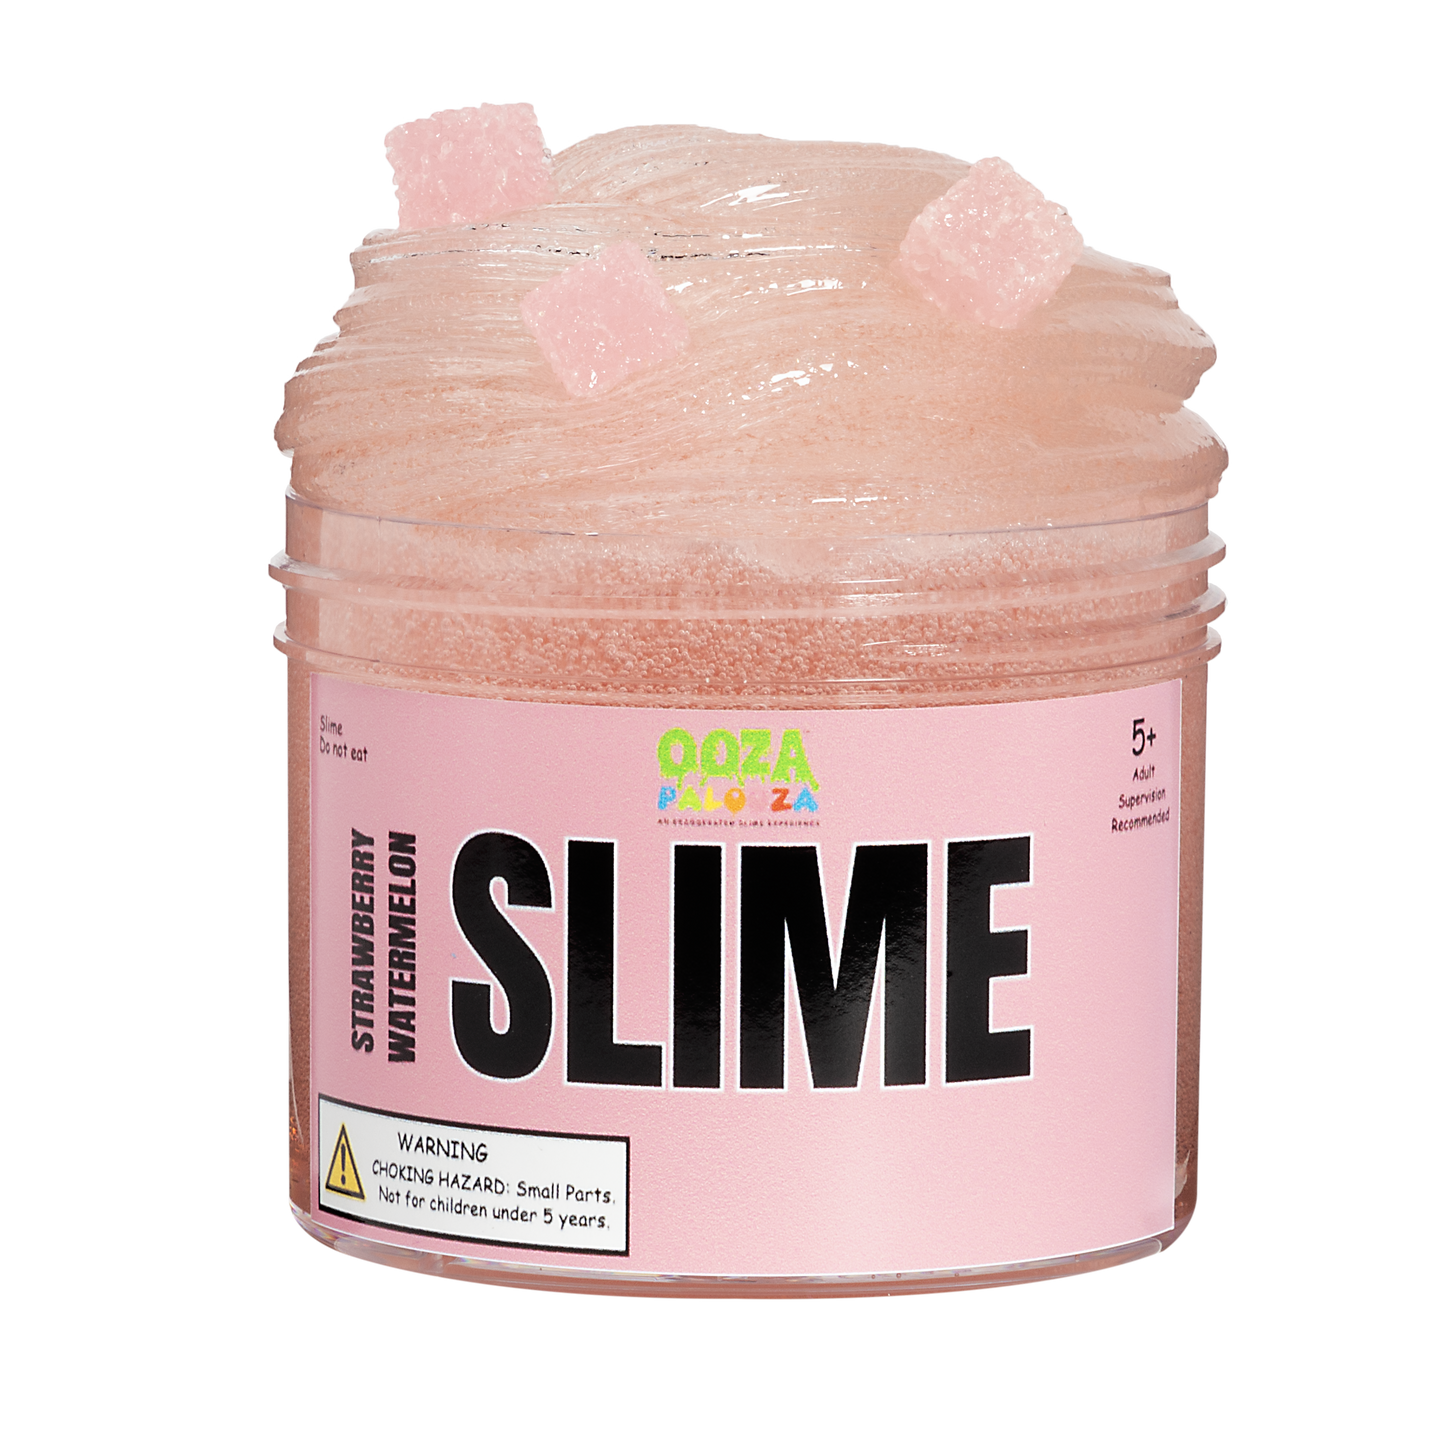 Slime Bundle